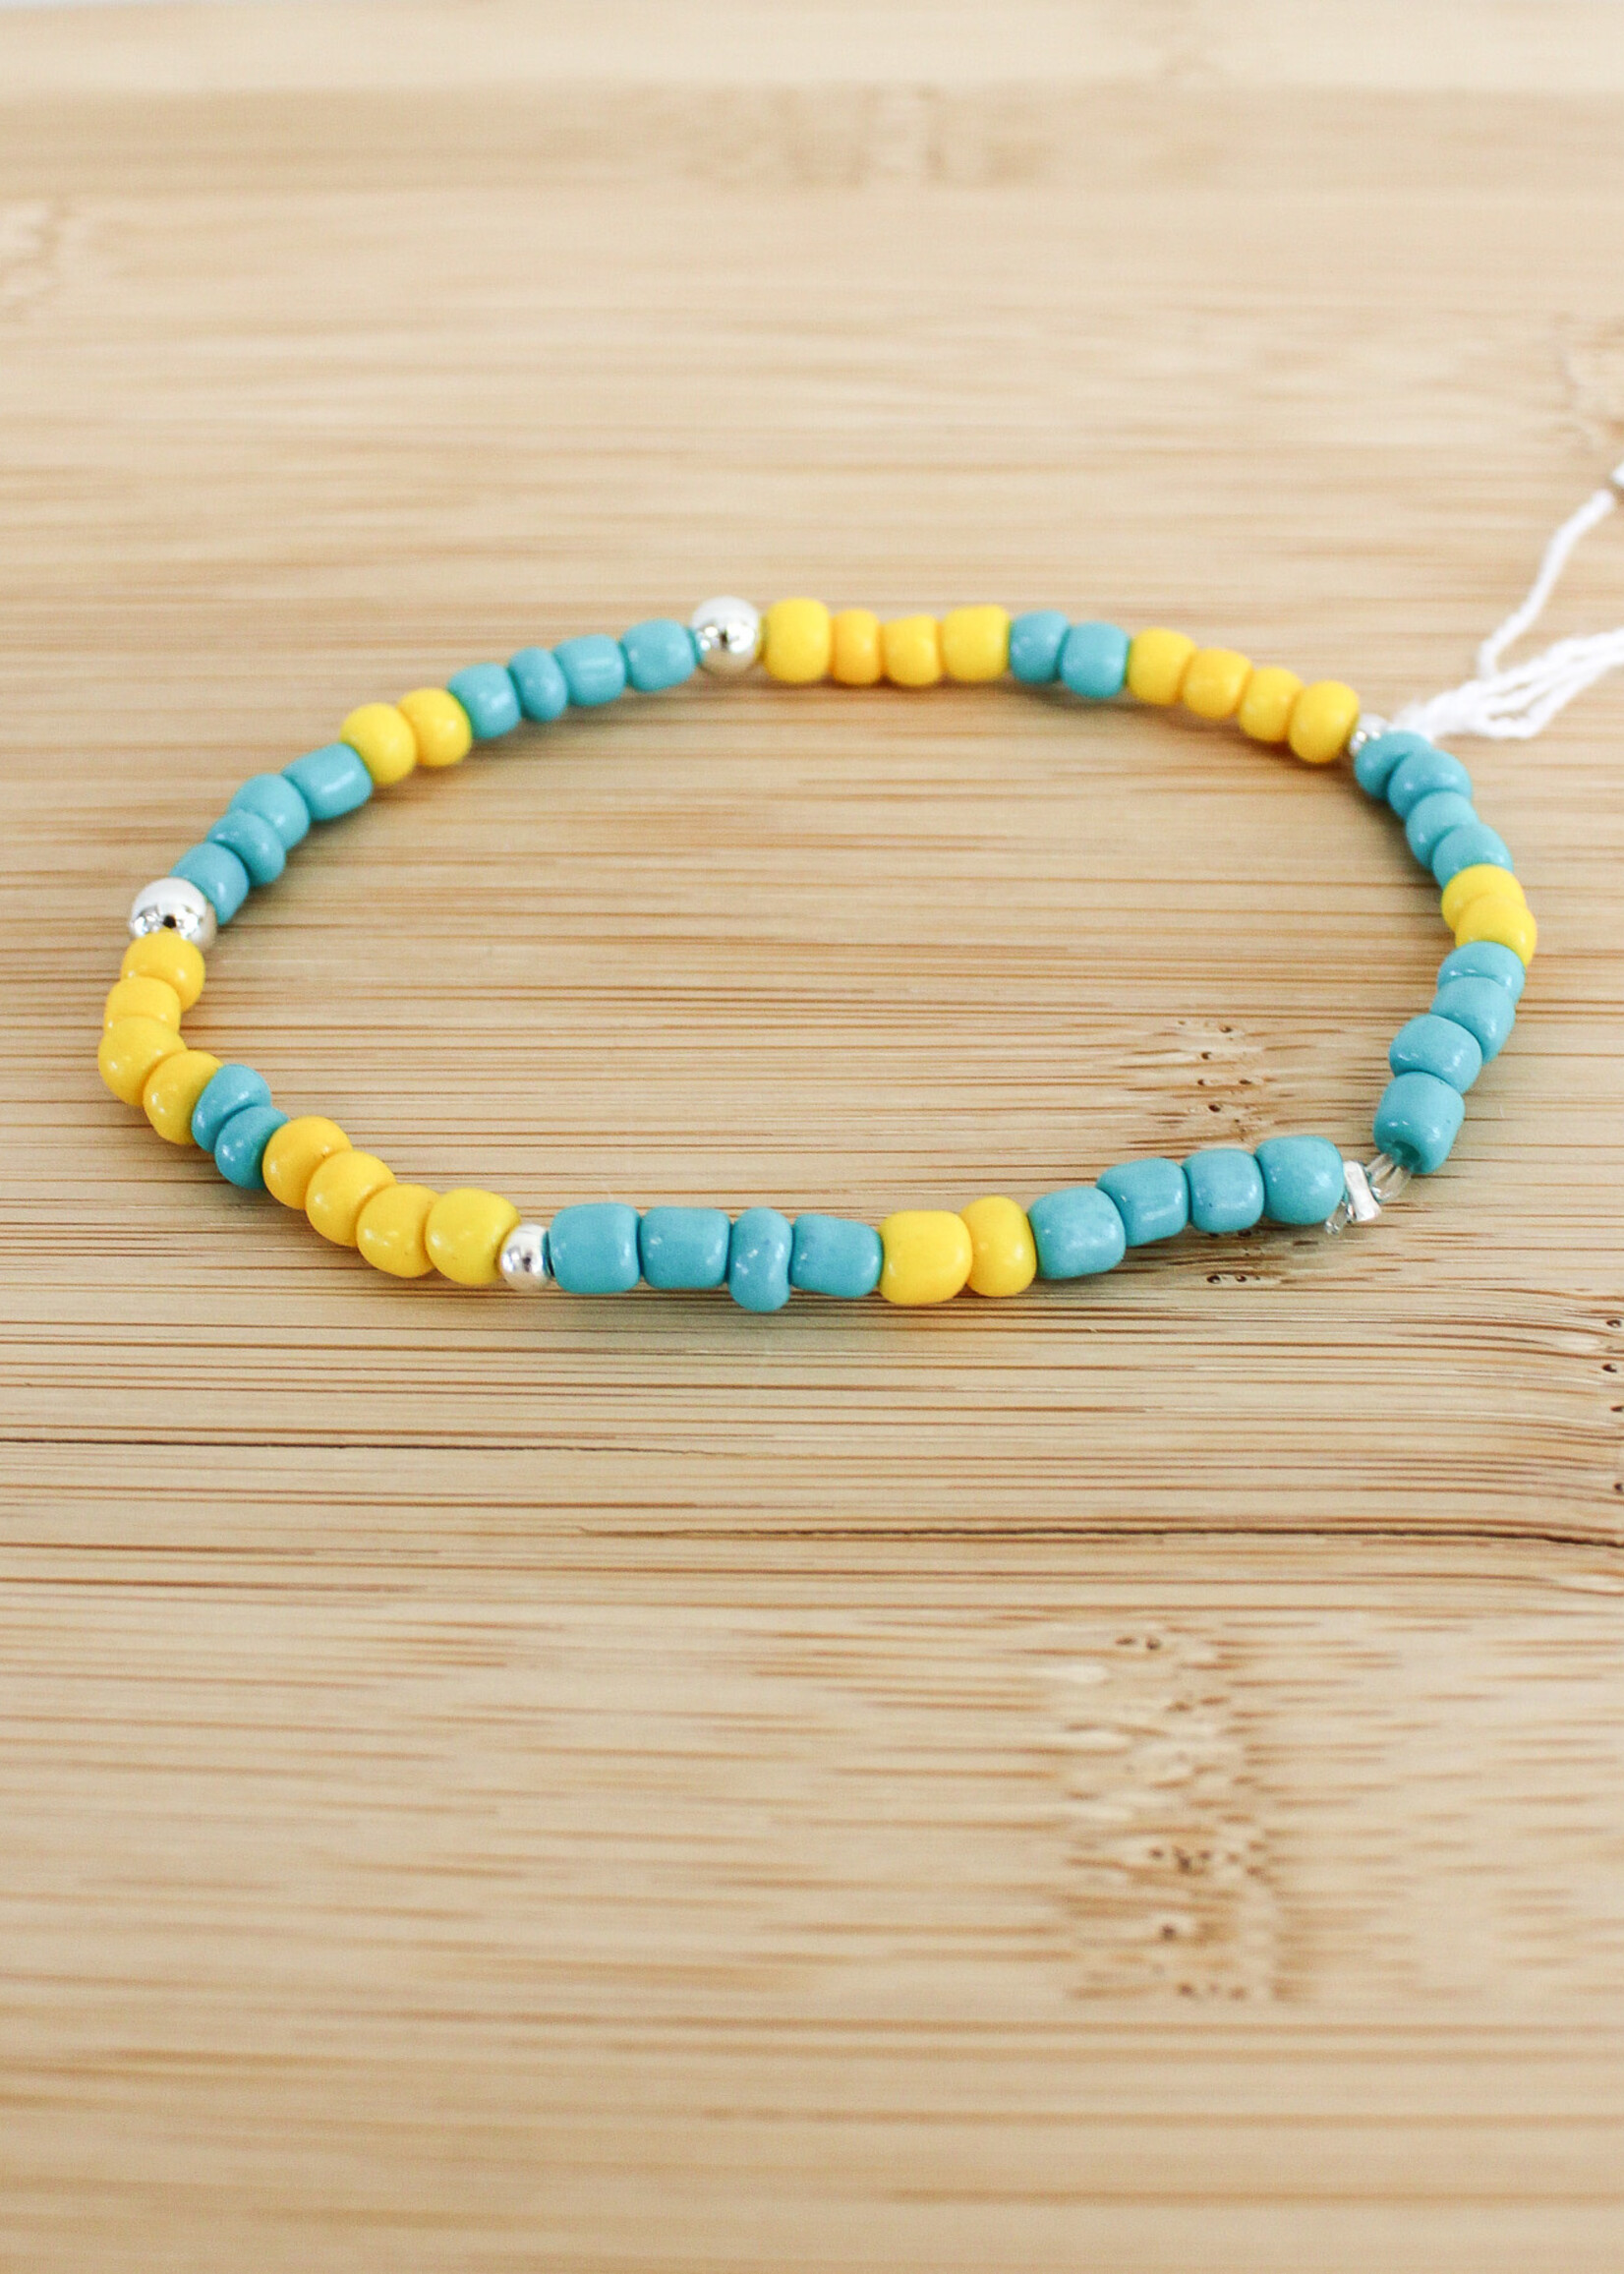 ACCESSORIES - Bracelet Blue/Yellow Beads 1 strand